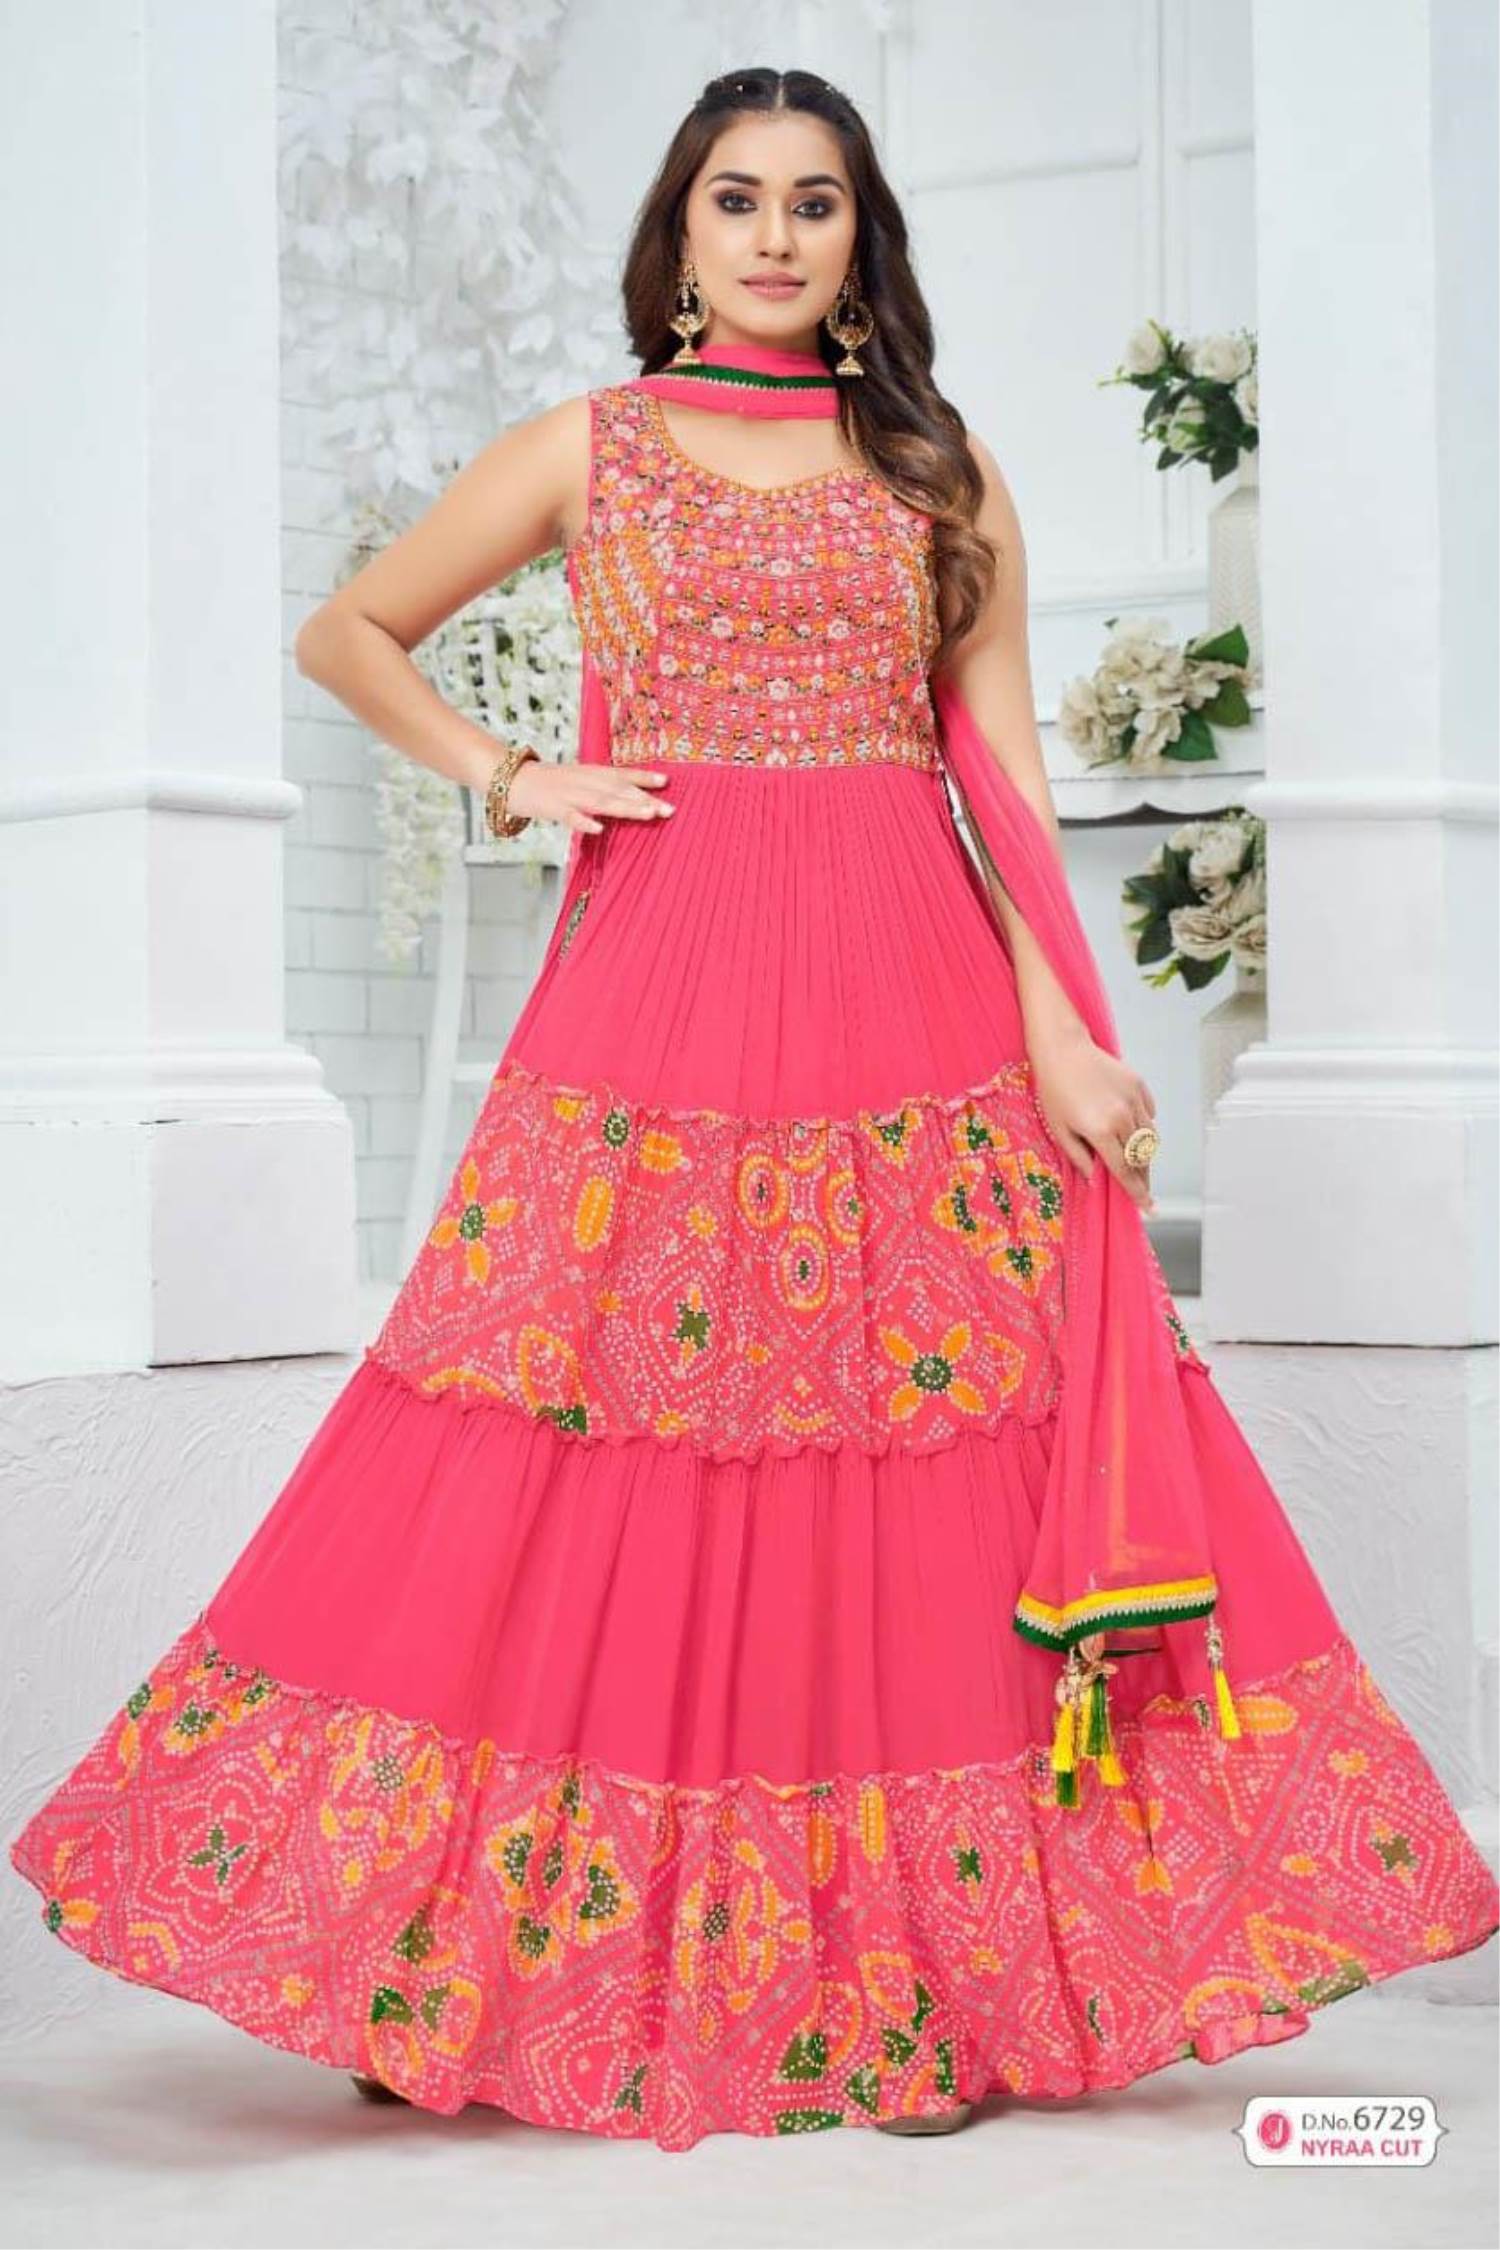 MUHURATAM Girls Gajri Colour Gown NewMAPRG20203GAJRI18  Amazonin  Clothing  Accessories